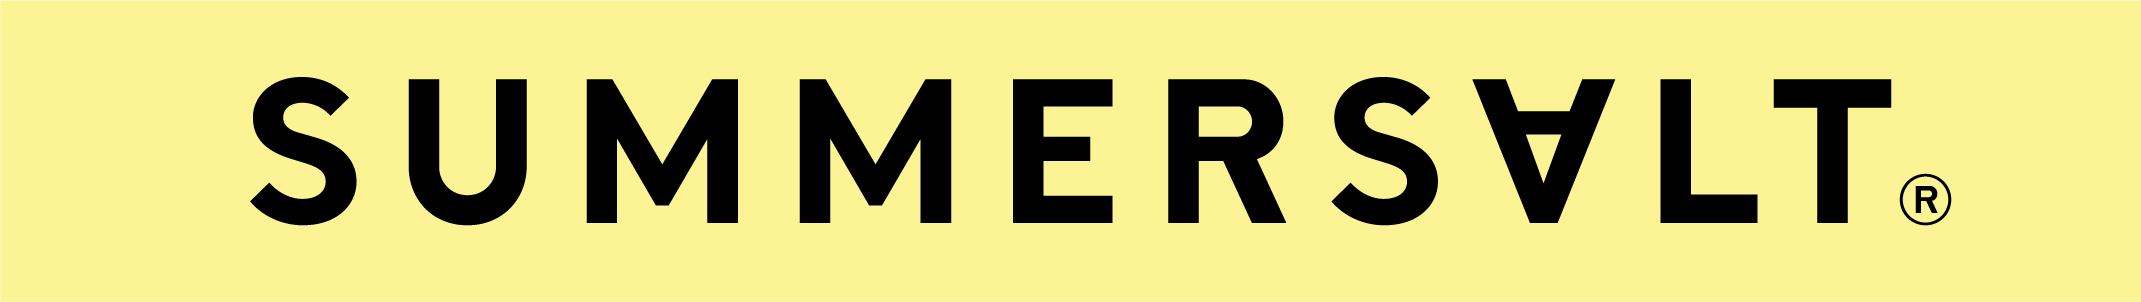 Summersalt logo